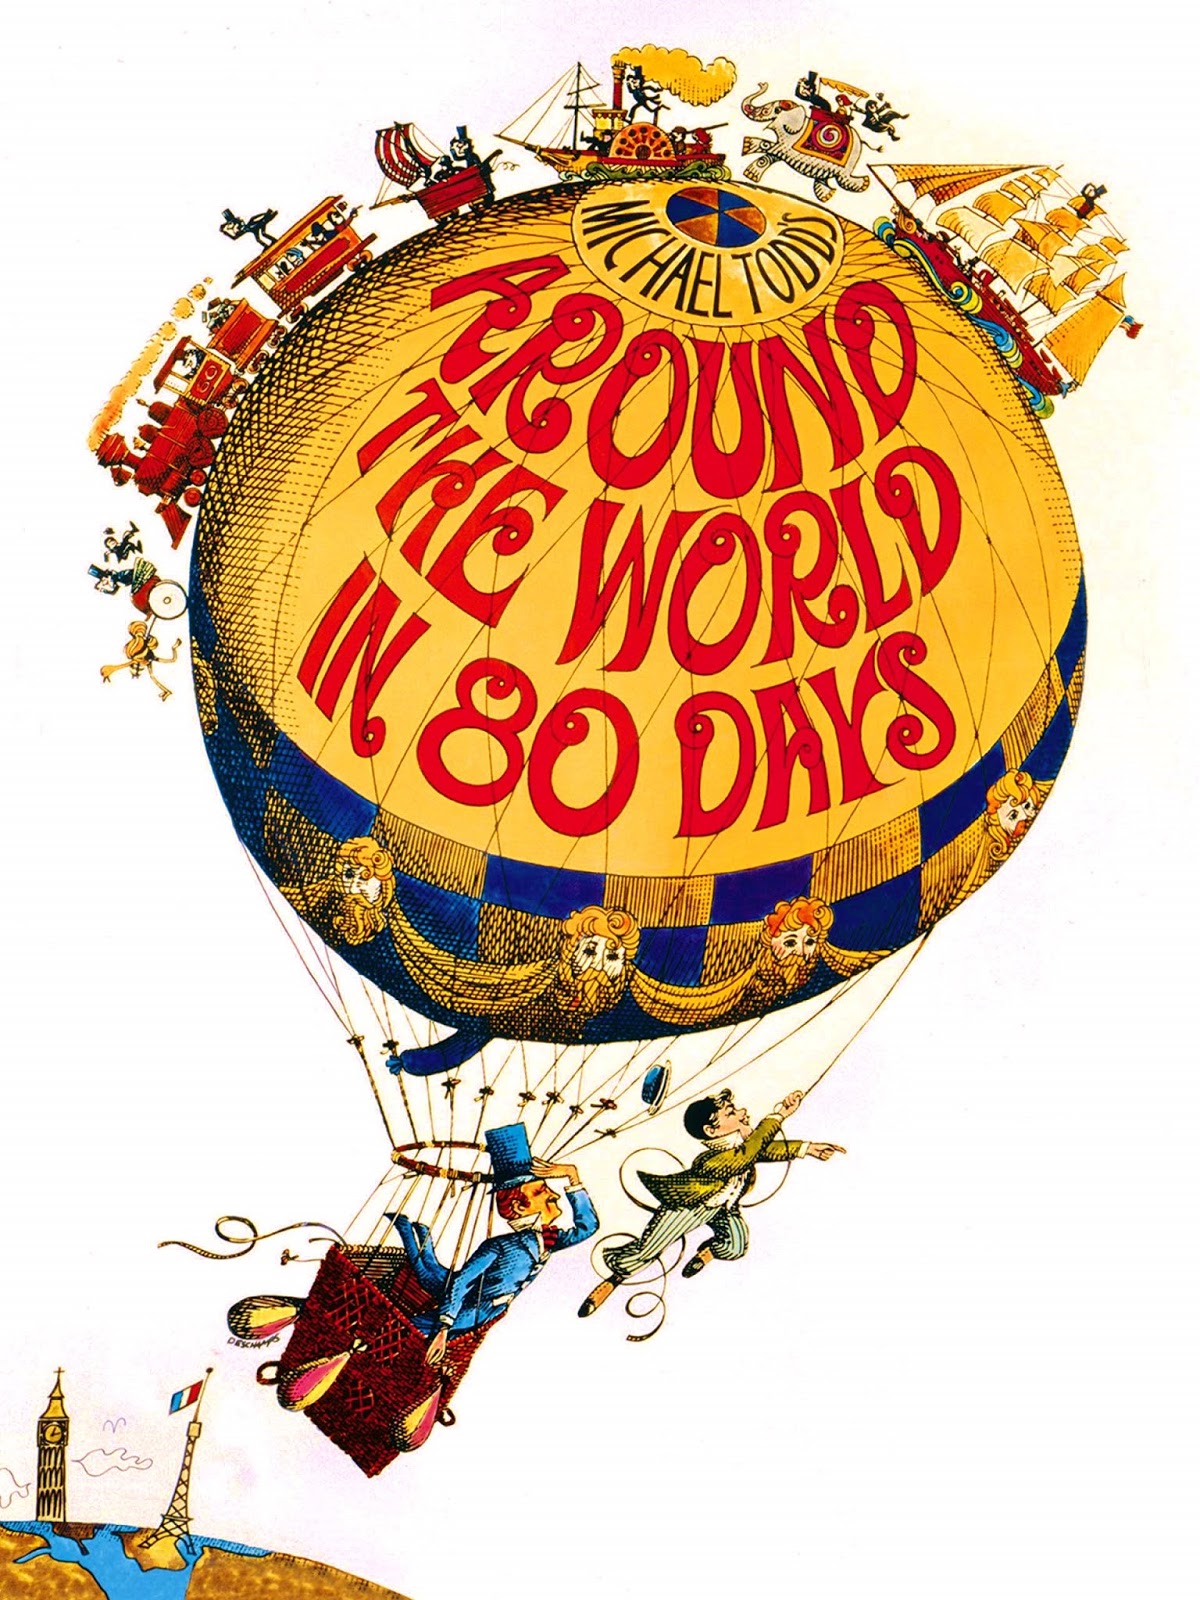 AROUND THE WORLD IN 80 DAYS (UA/Magna, 1956) Warner Home Video